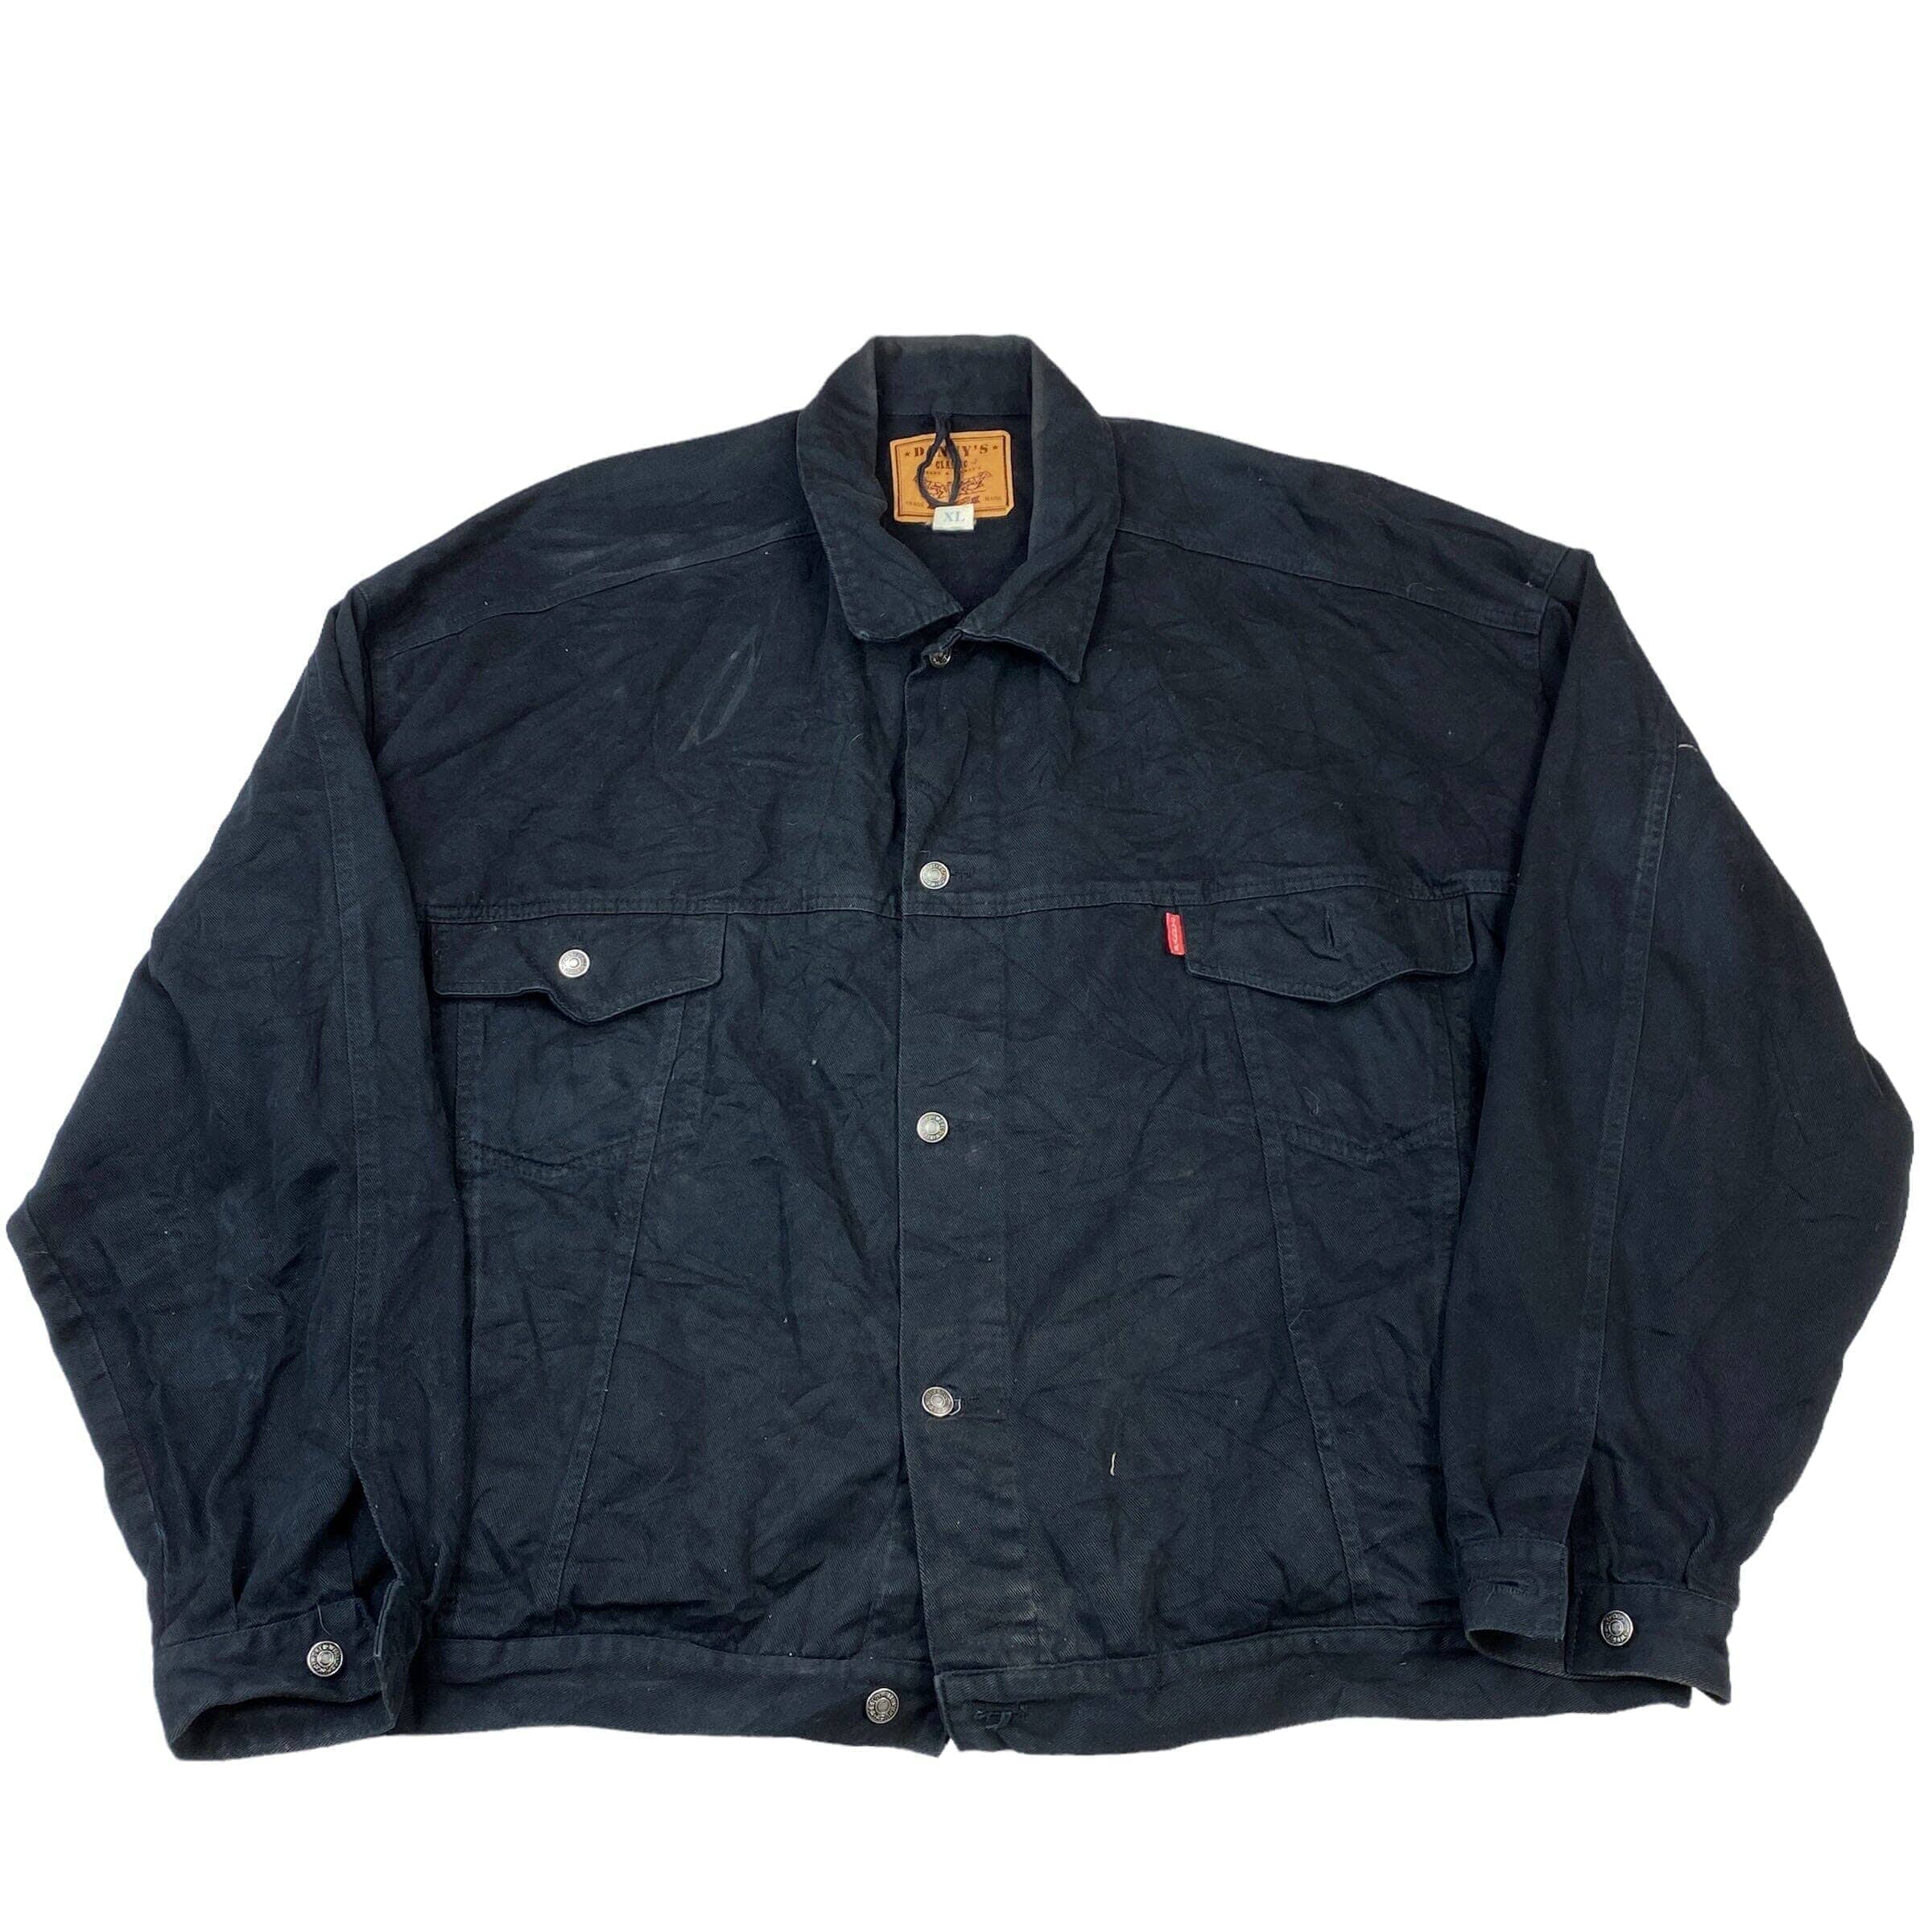 men's Wrangler Jean jacket size 40 Vintage Made in USA | eBay